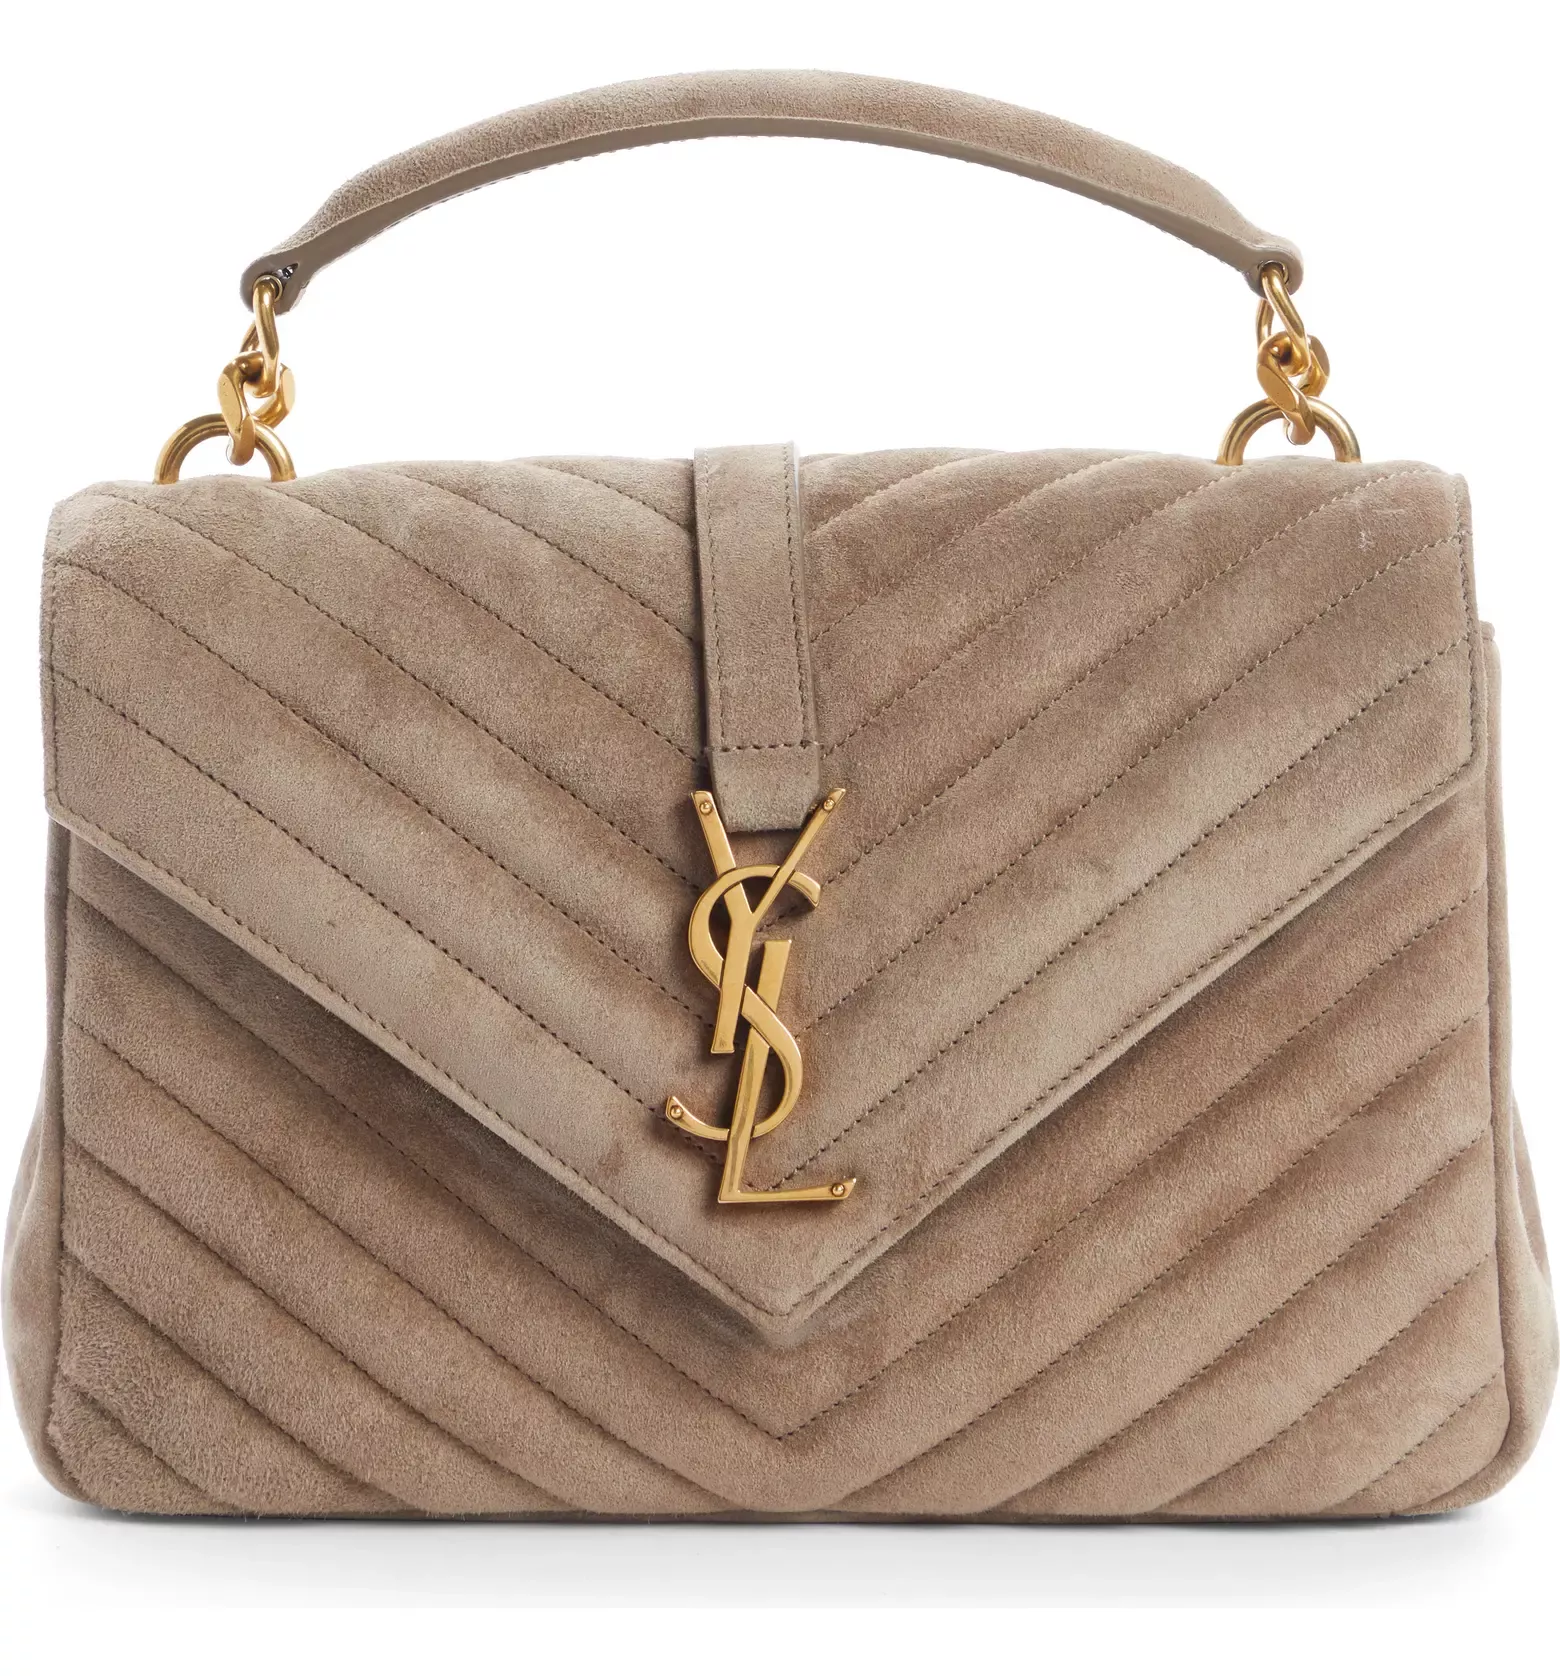 Louis Vuitton Monogram Bag Nordstrom